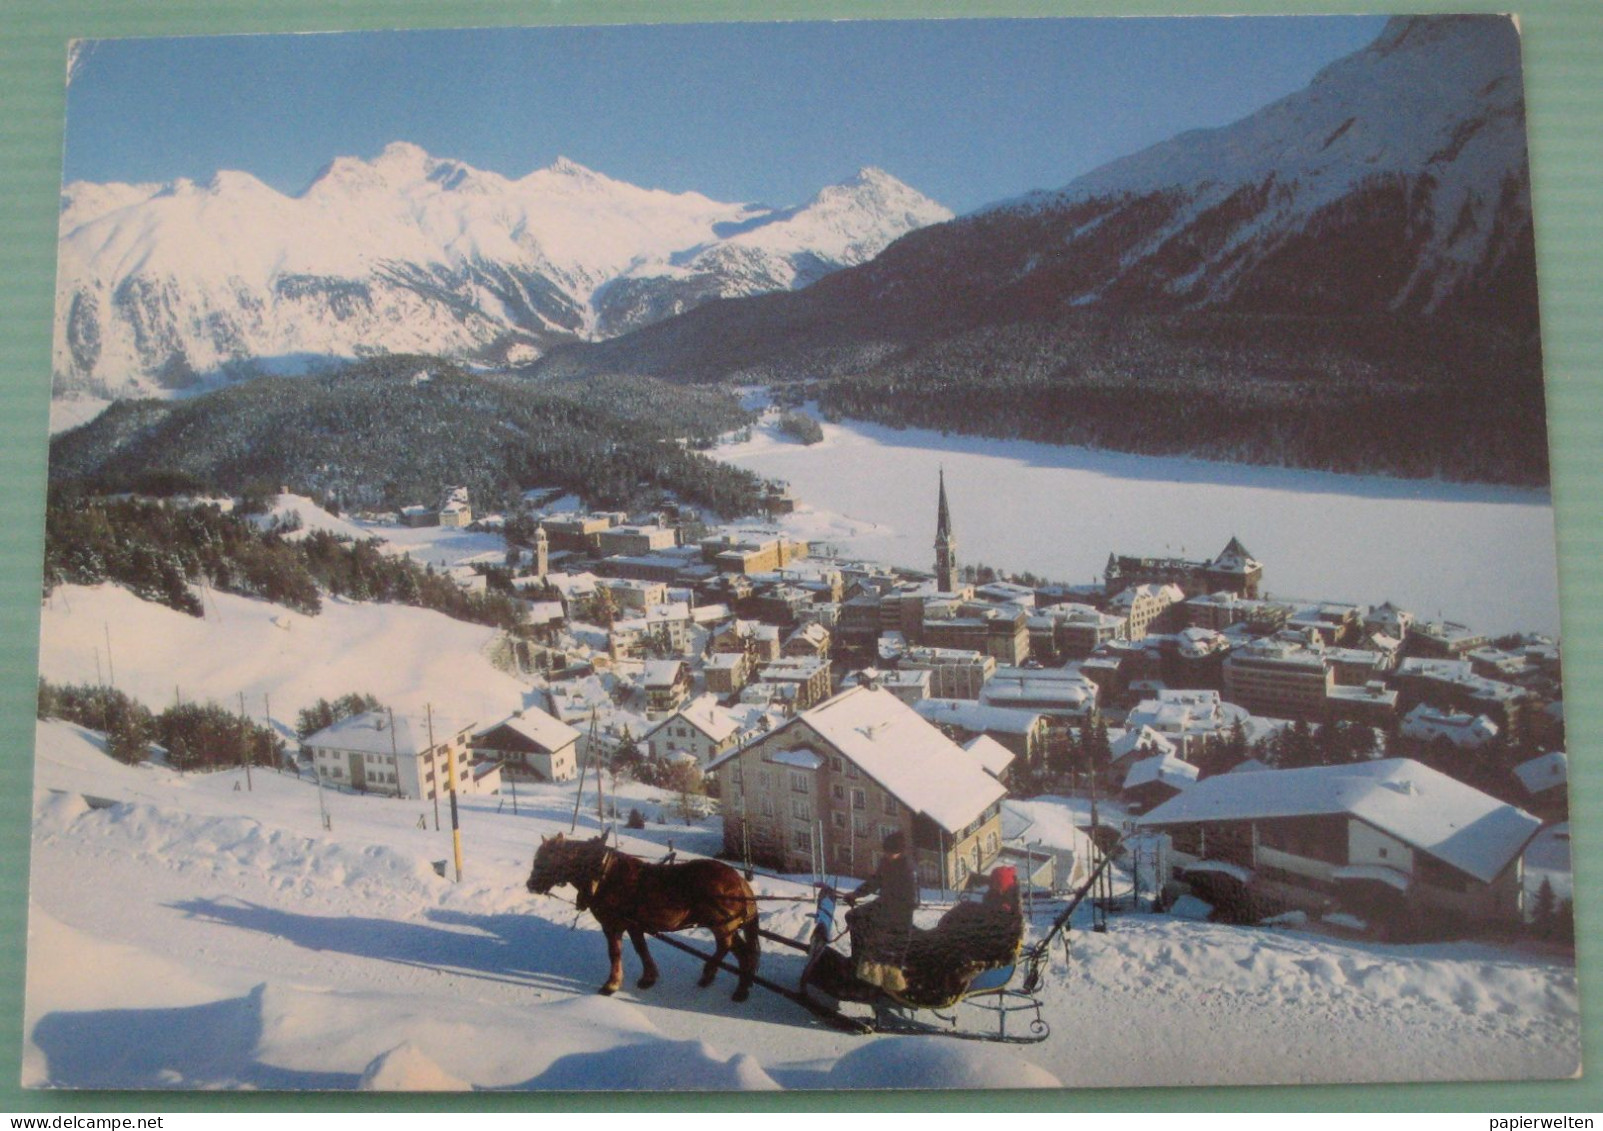 St. Moritz (GR) - Winter Pferdekutschenfahrt - Saint-Moritz